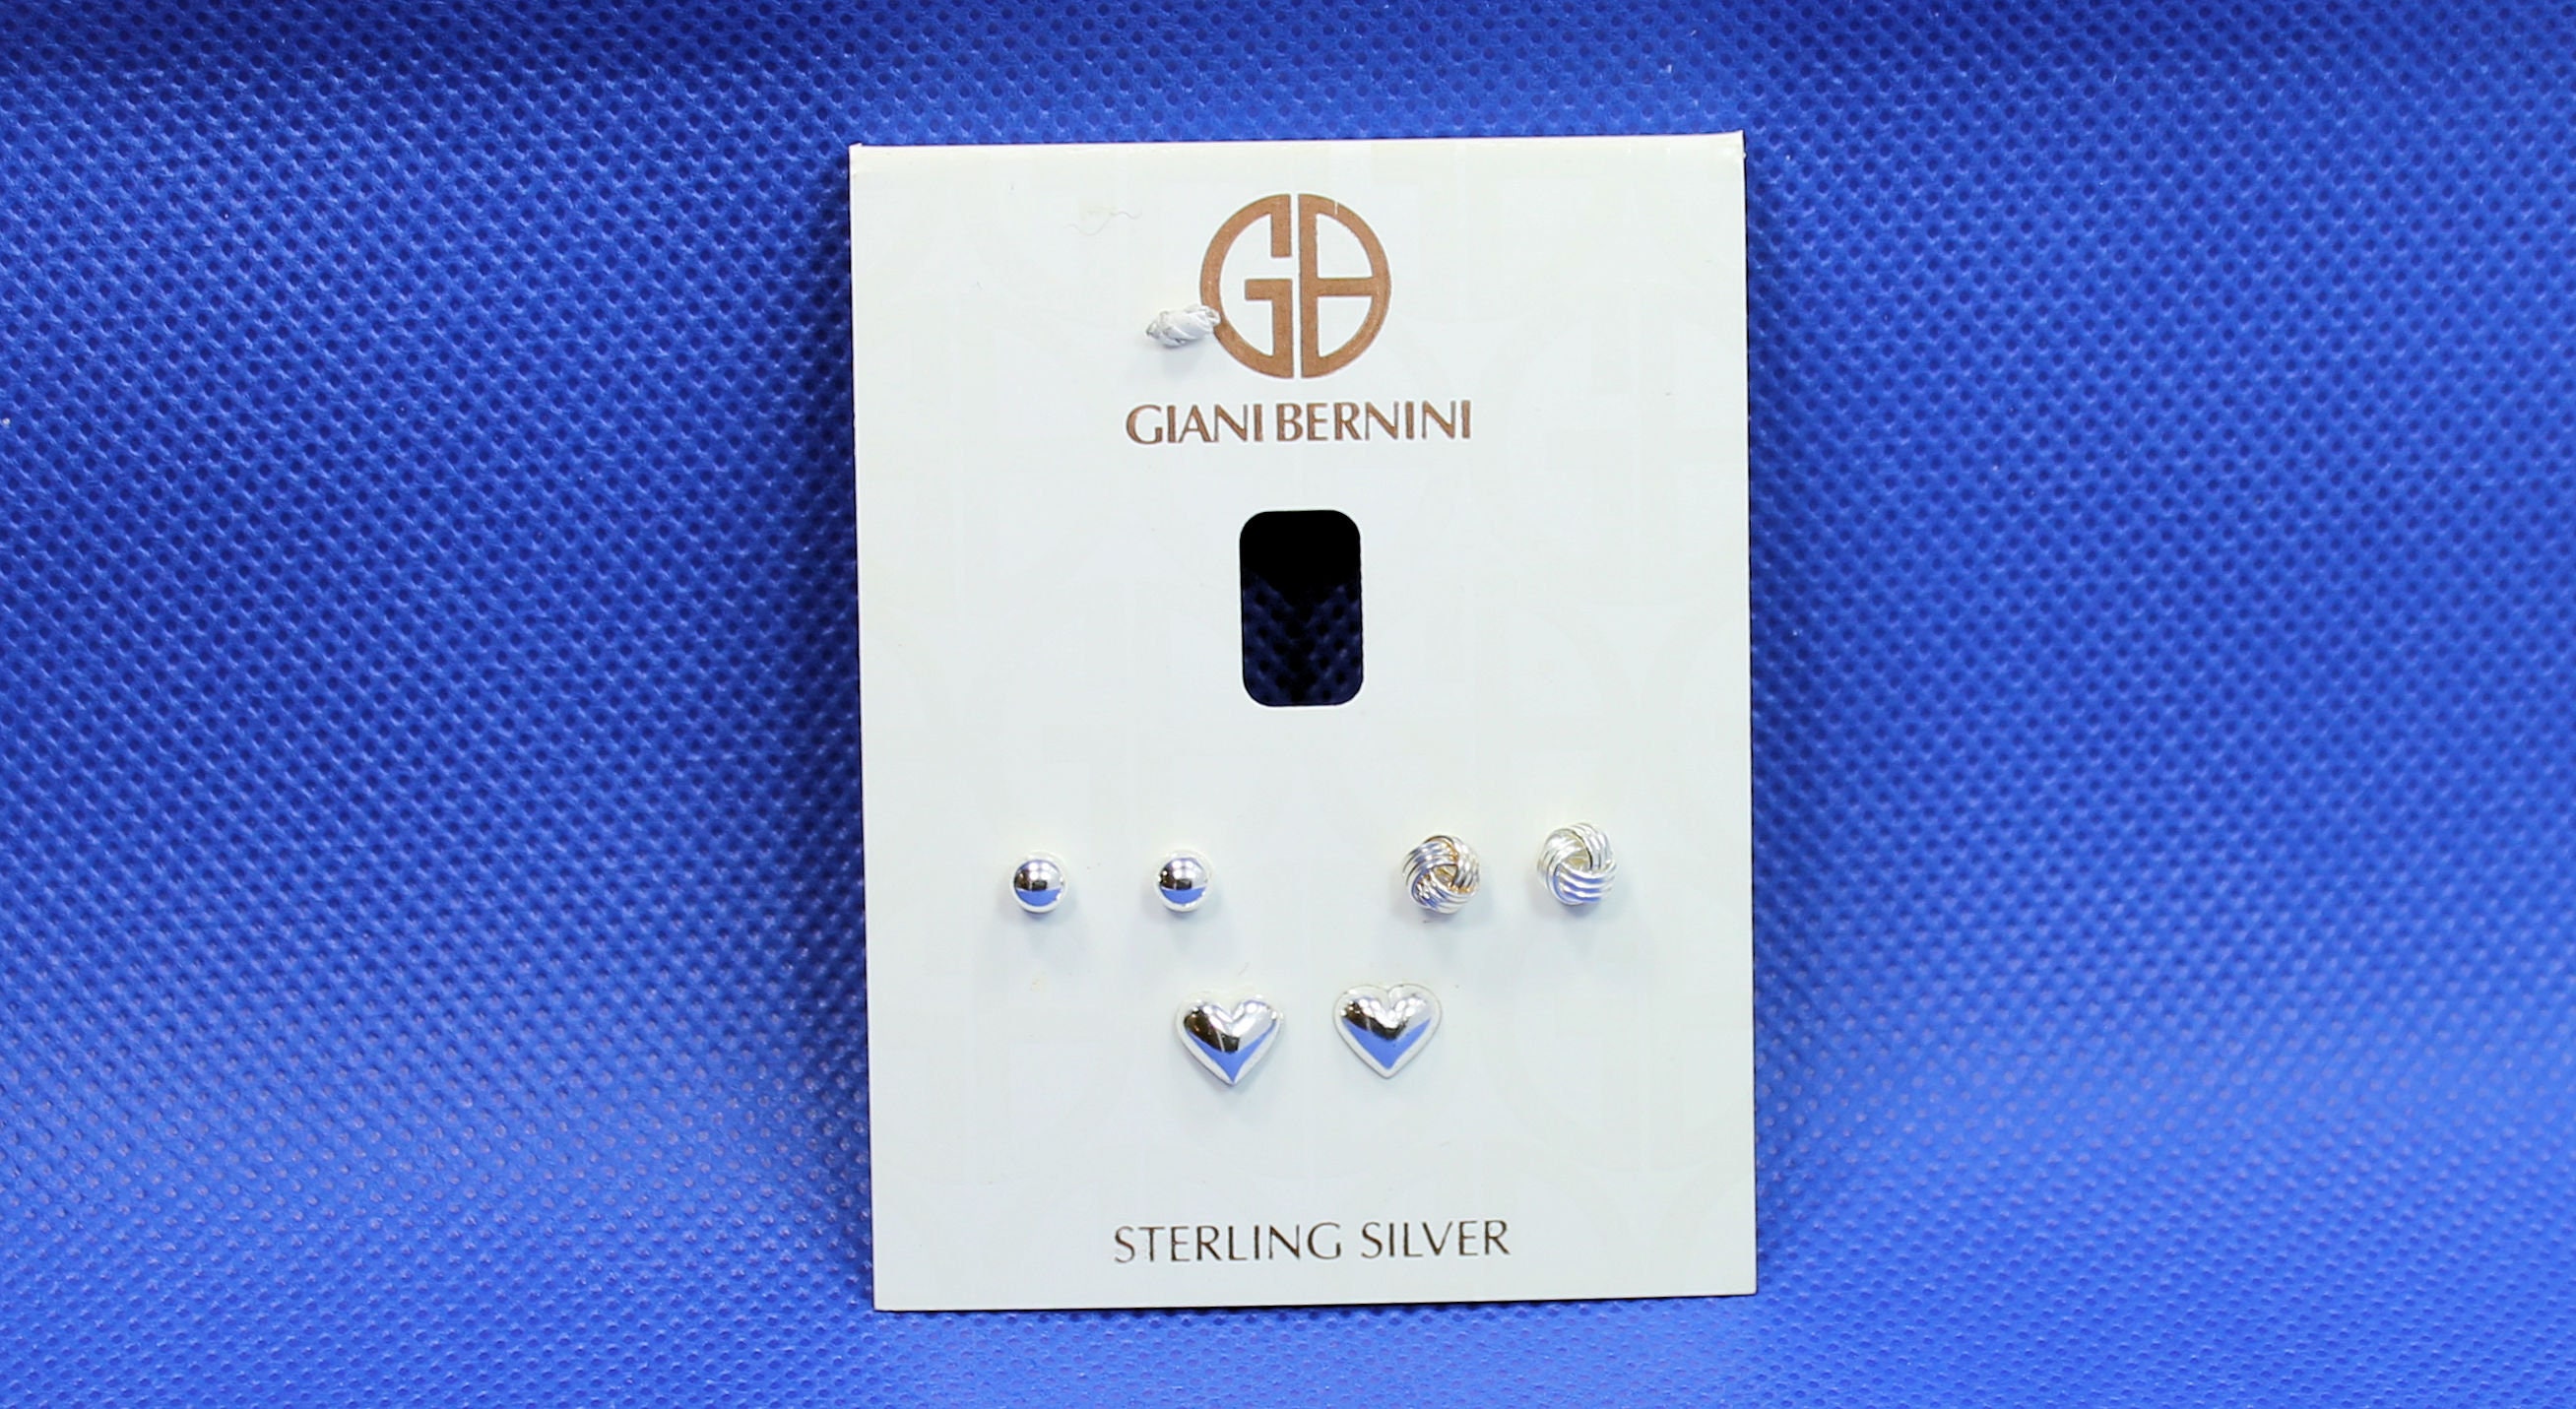 Giani Bernini Earrings